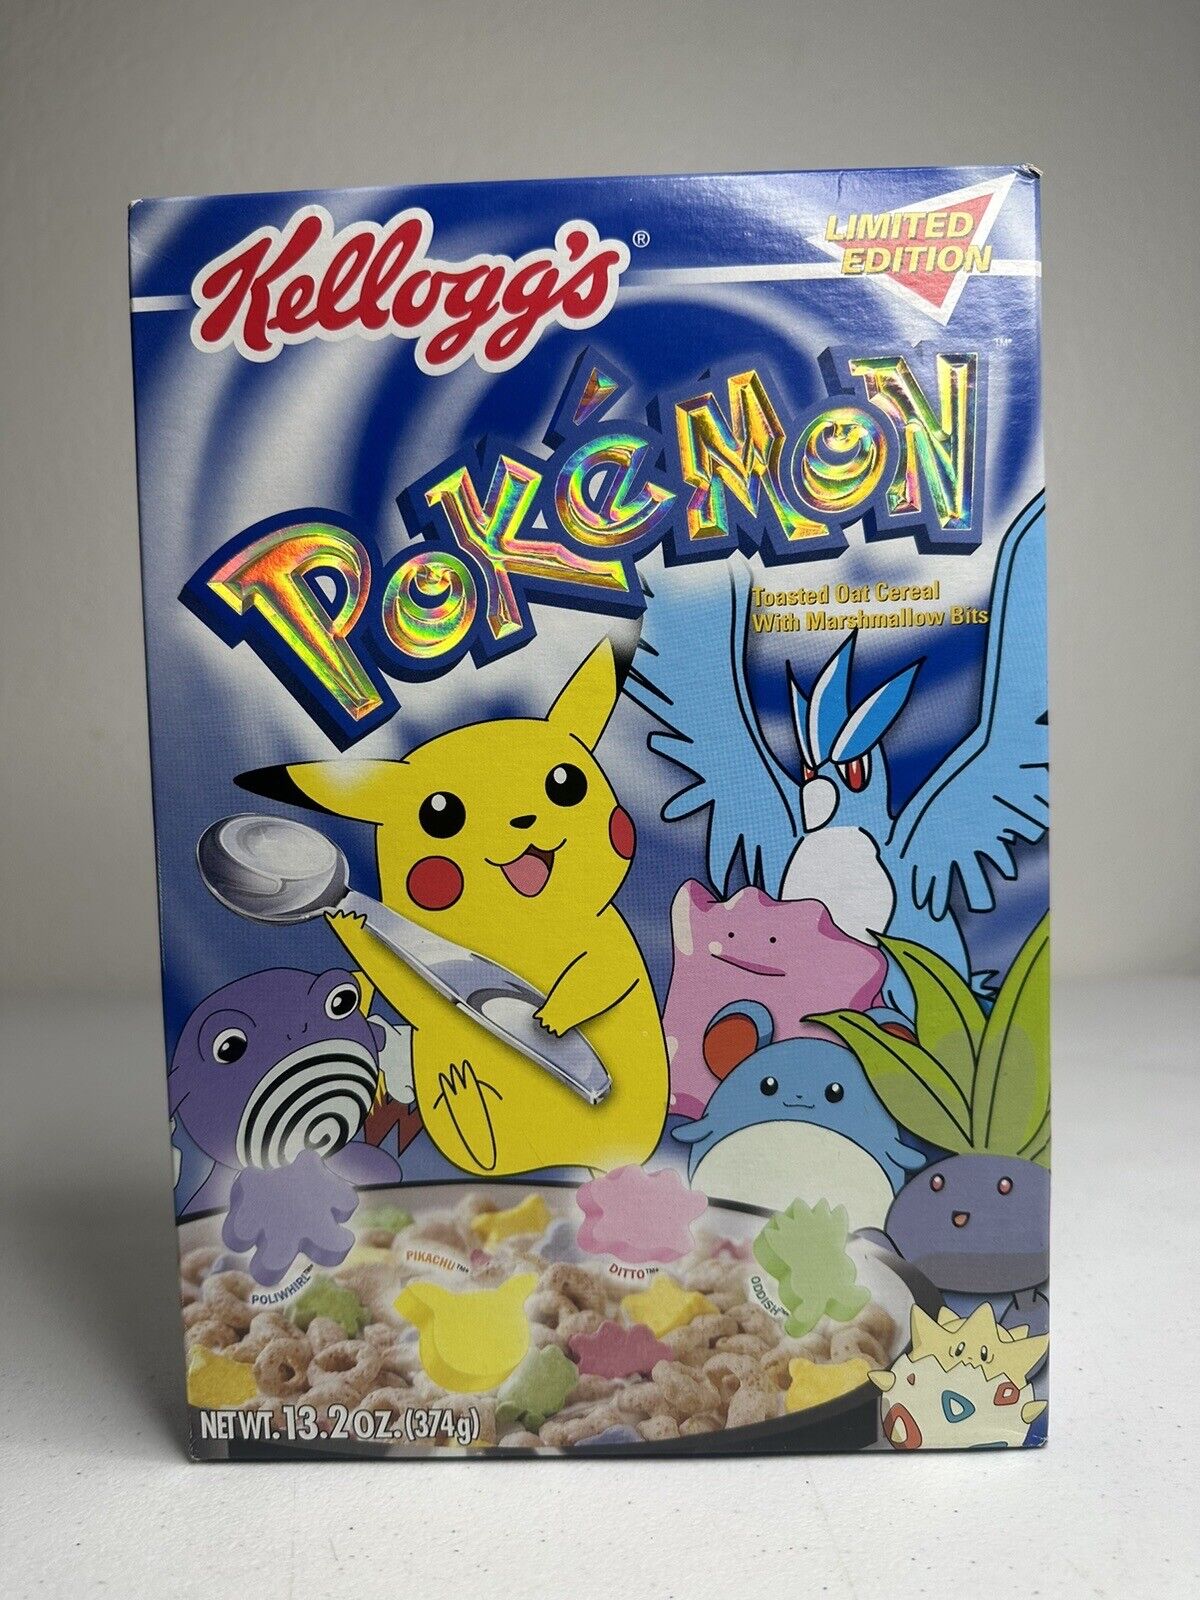 Vintage Kellogg’s Pokémon Foil Cereal Box 2000 Limited Edition Collector's Item